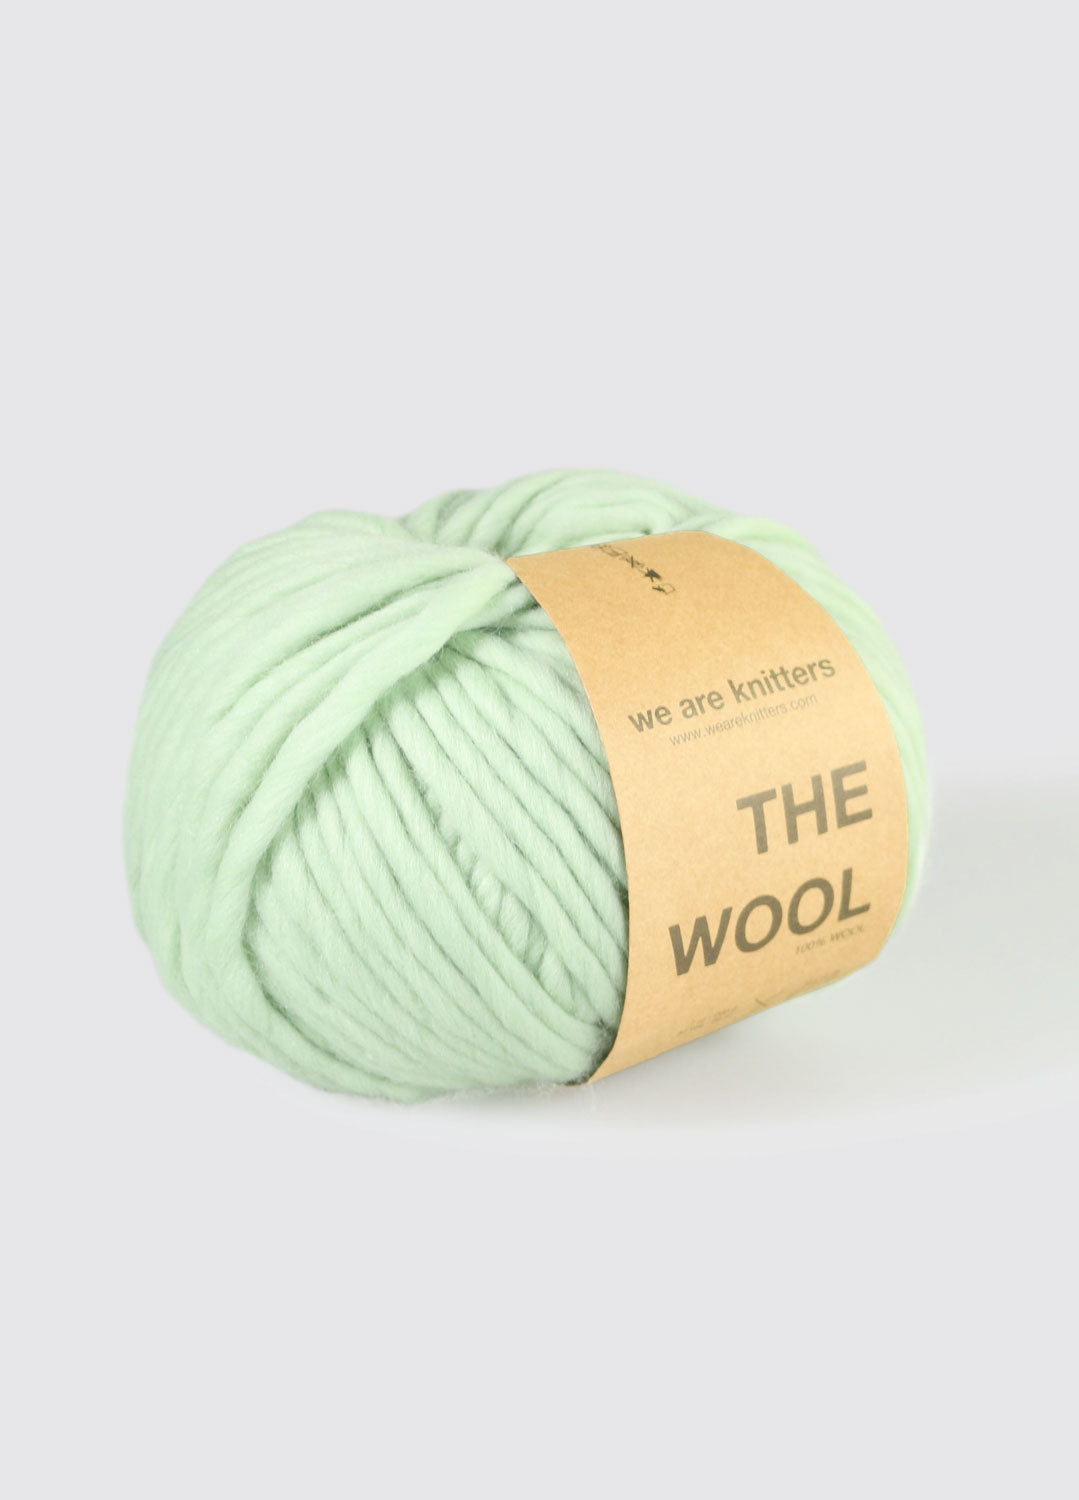 The Boucle Cloud Yarn Natural – weareknitters